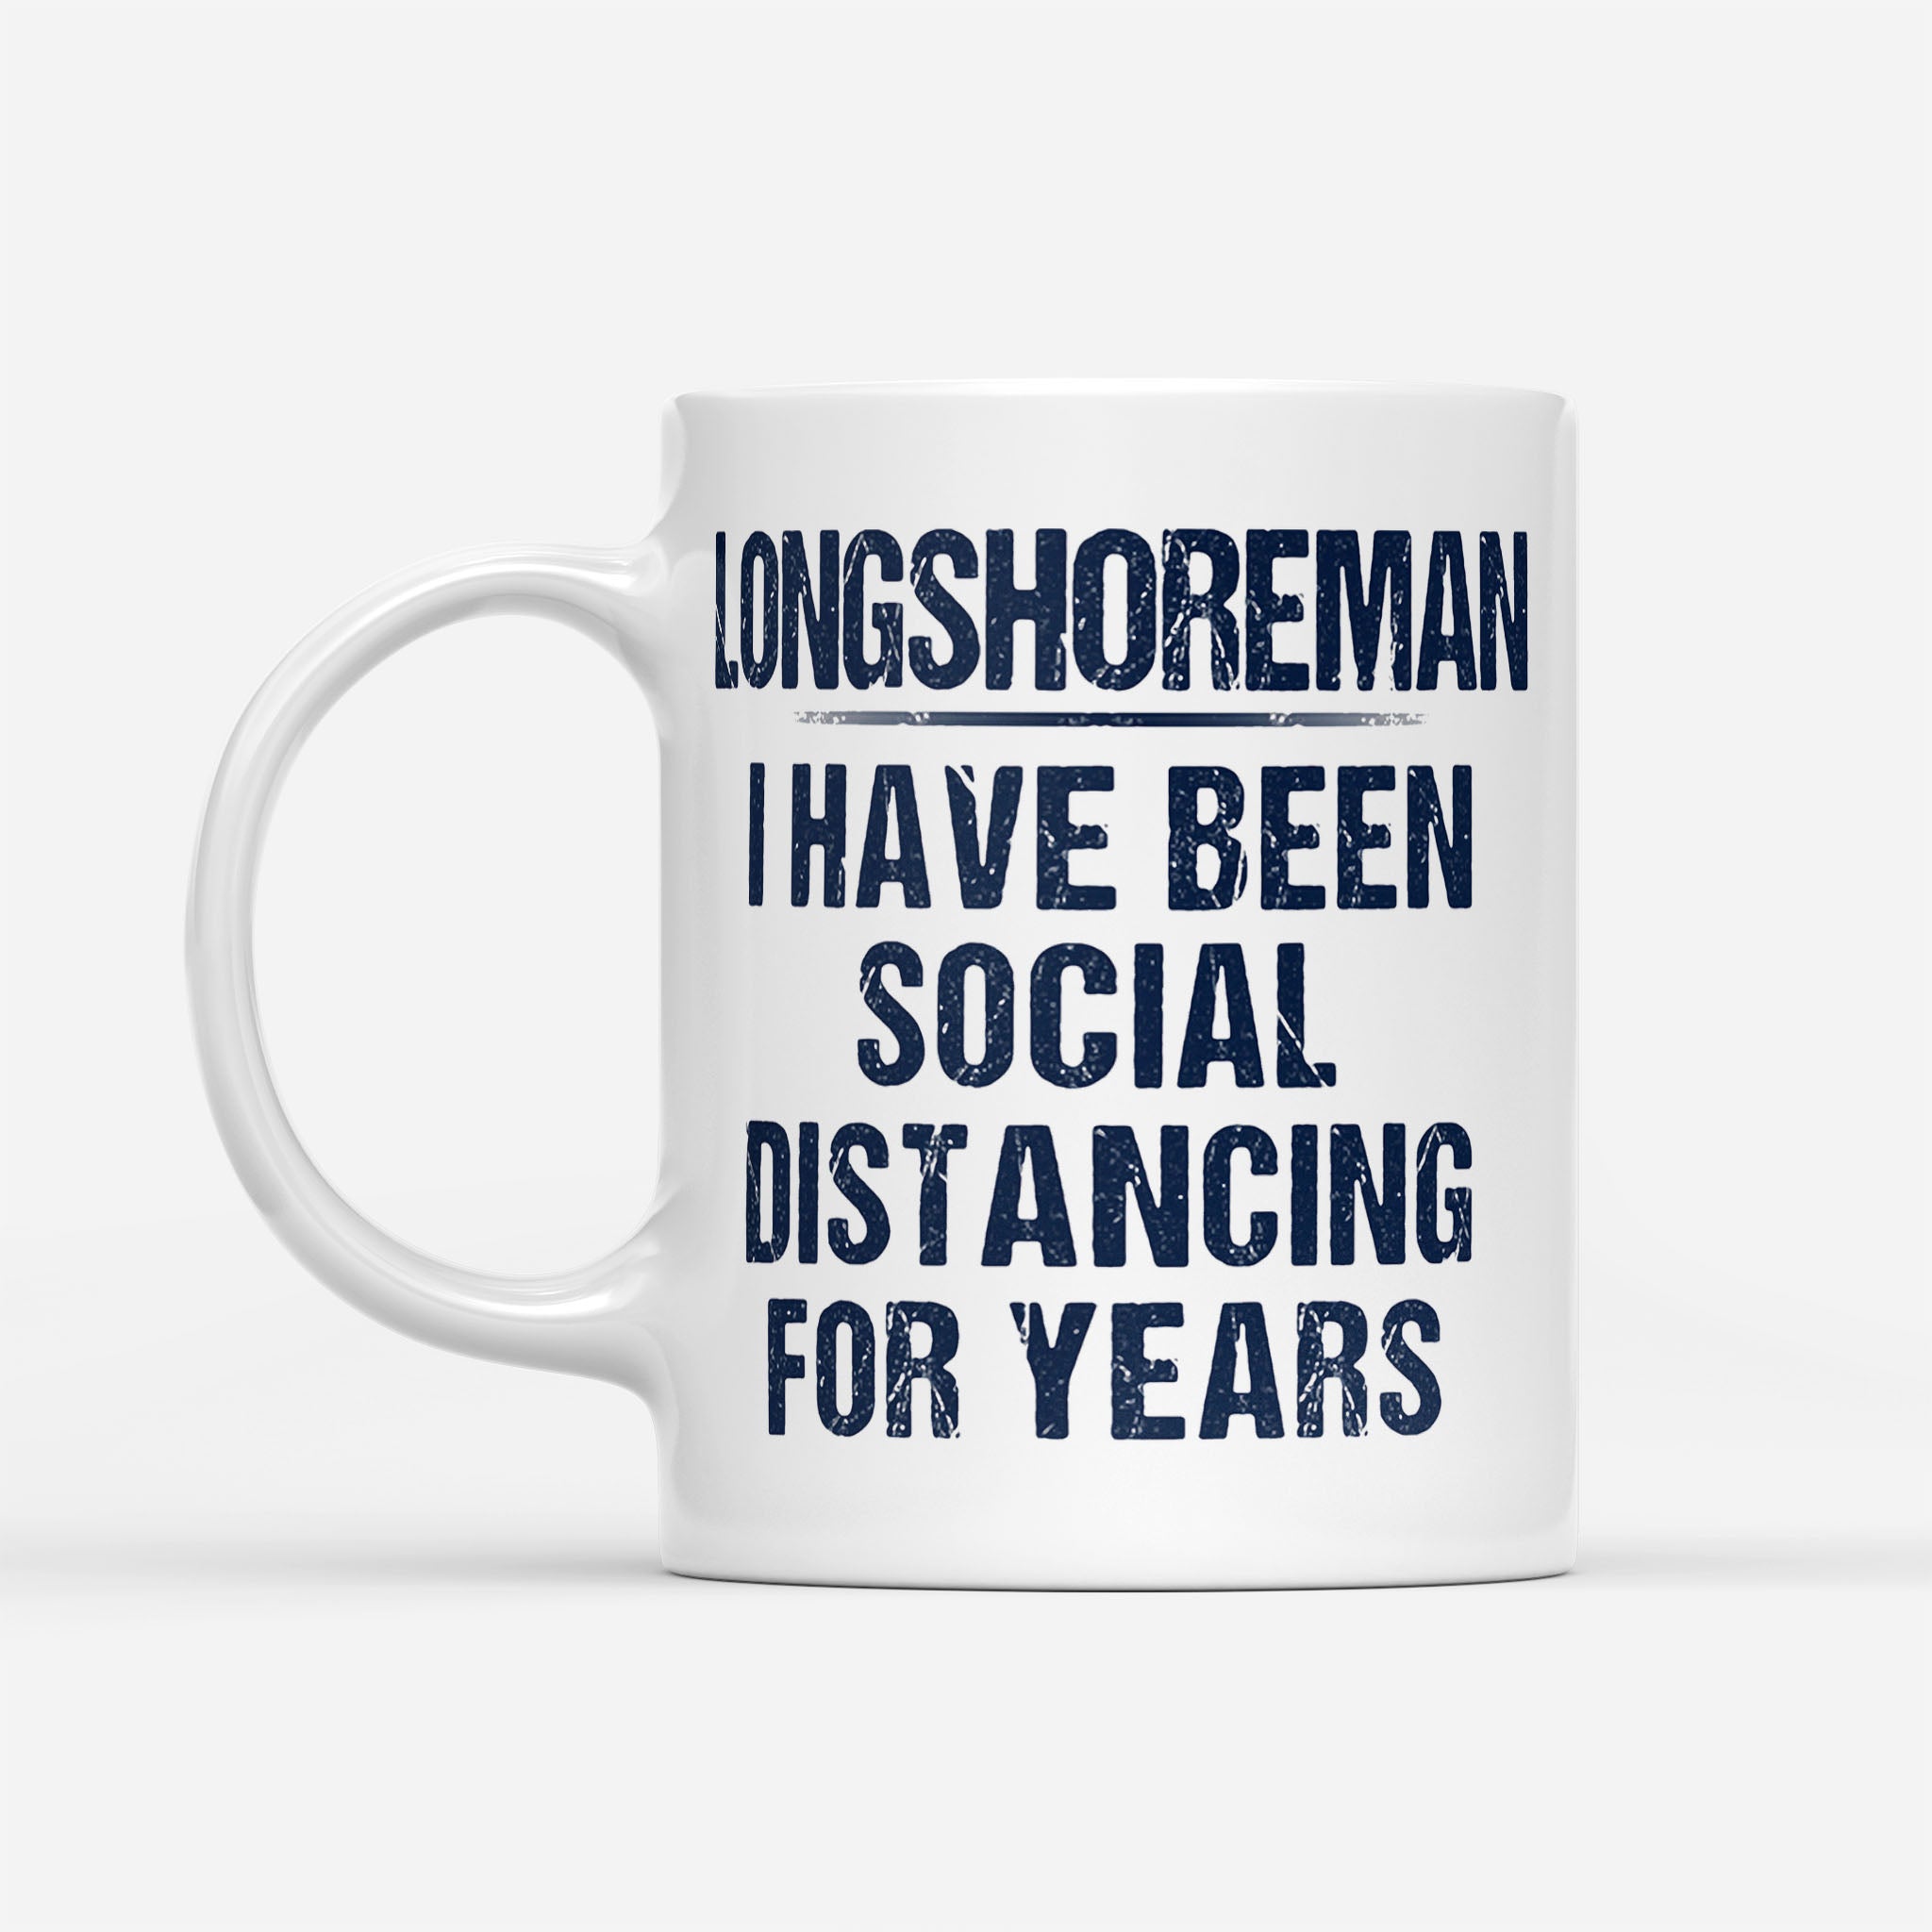 Longshoreman I Have Been Social Distancing For Years - White Mug